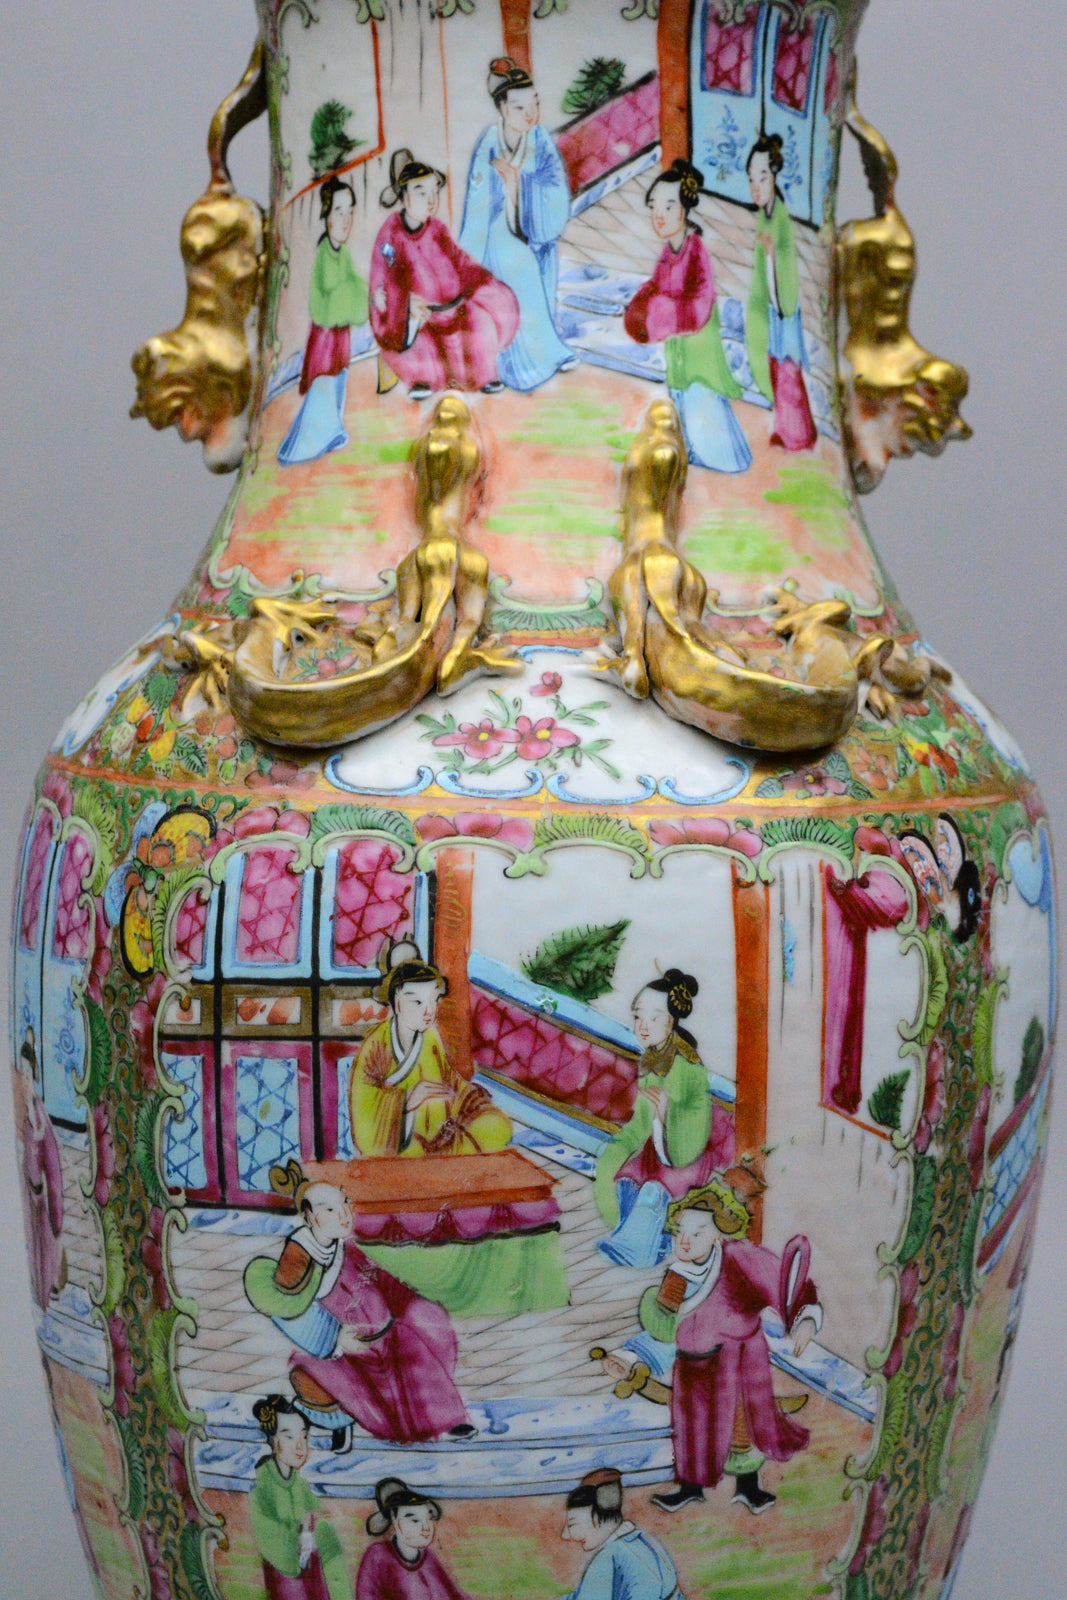 Cantonese Baluster Famille Rose Vase